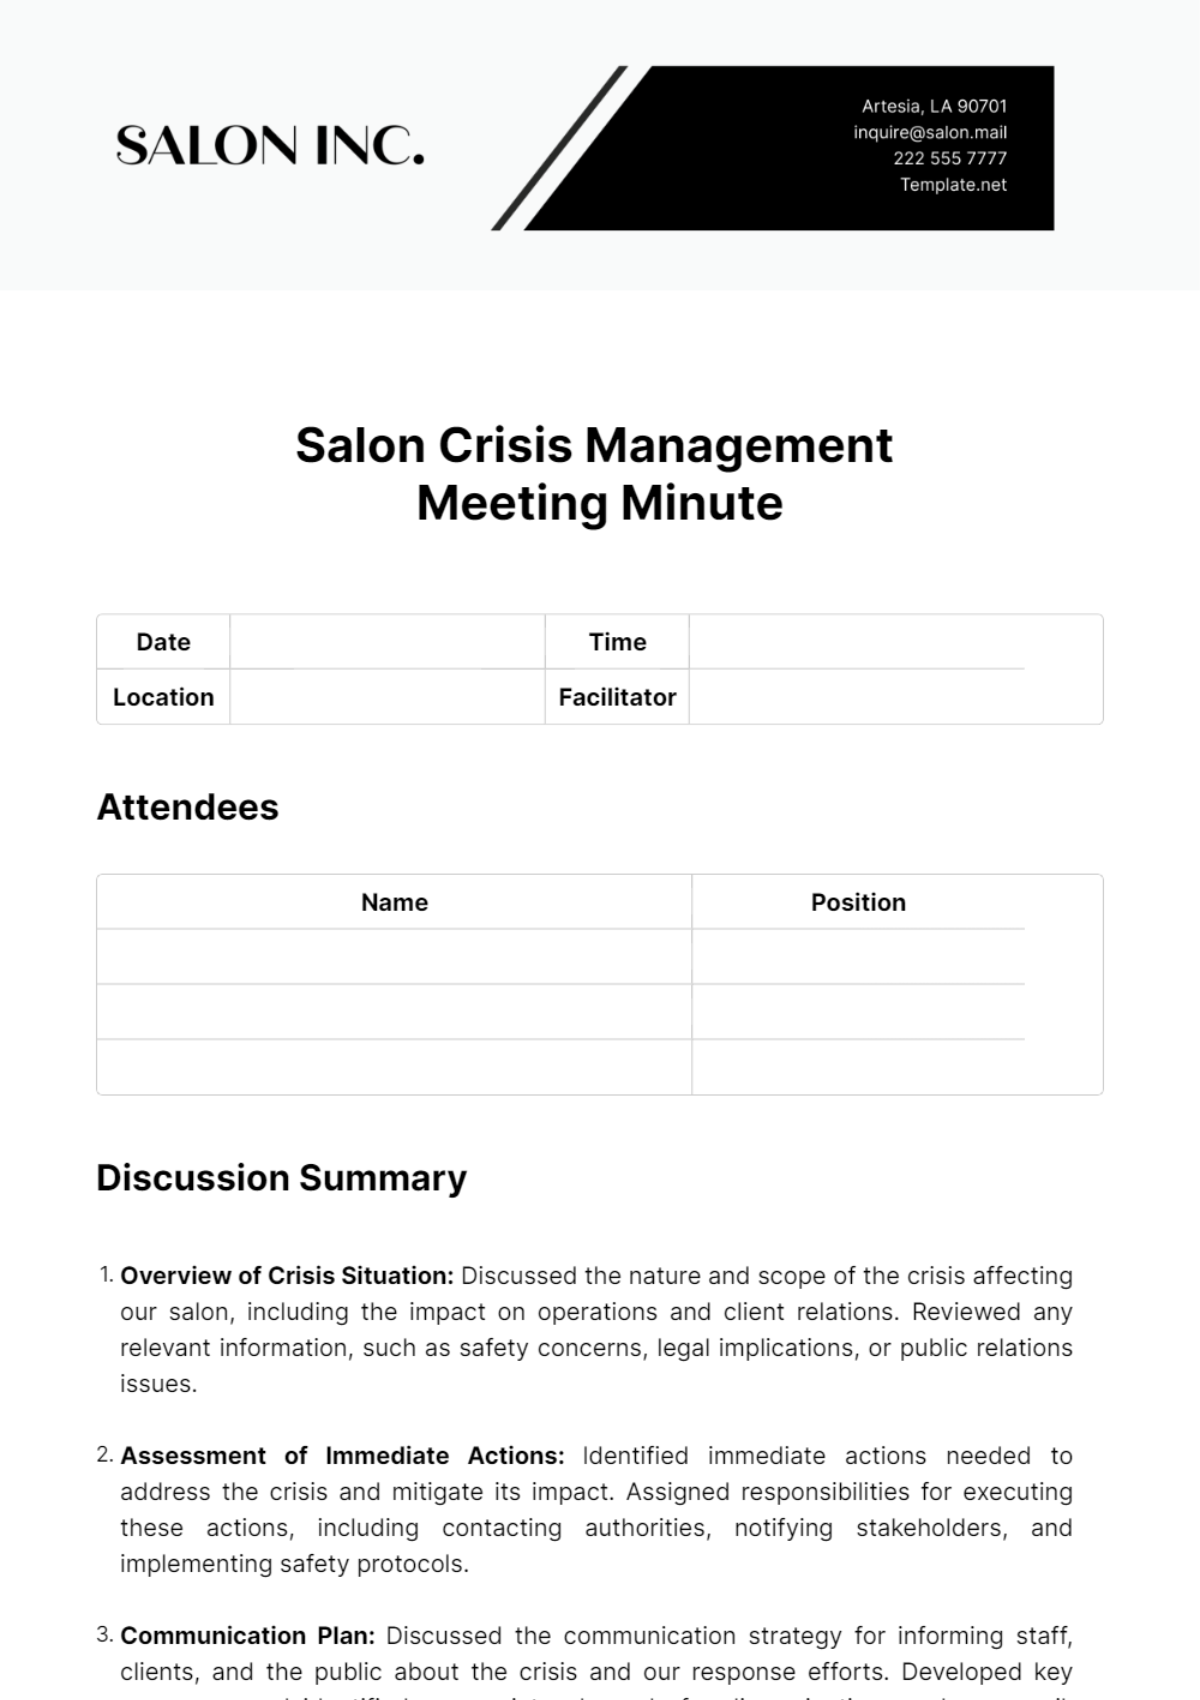 Free Salon Crisis Management Meeting Minute Template